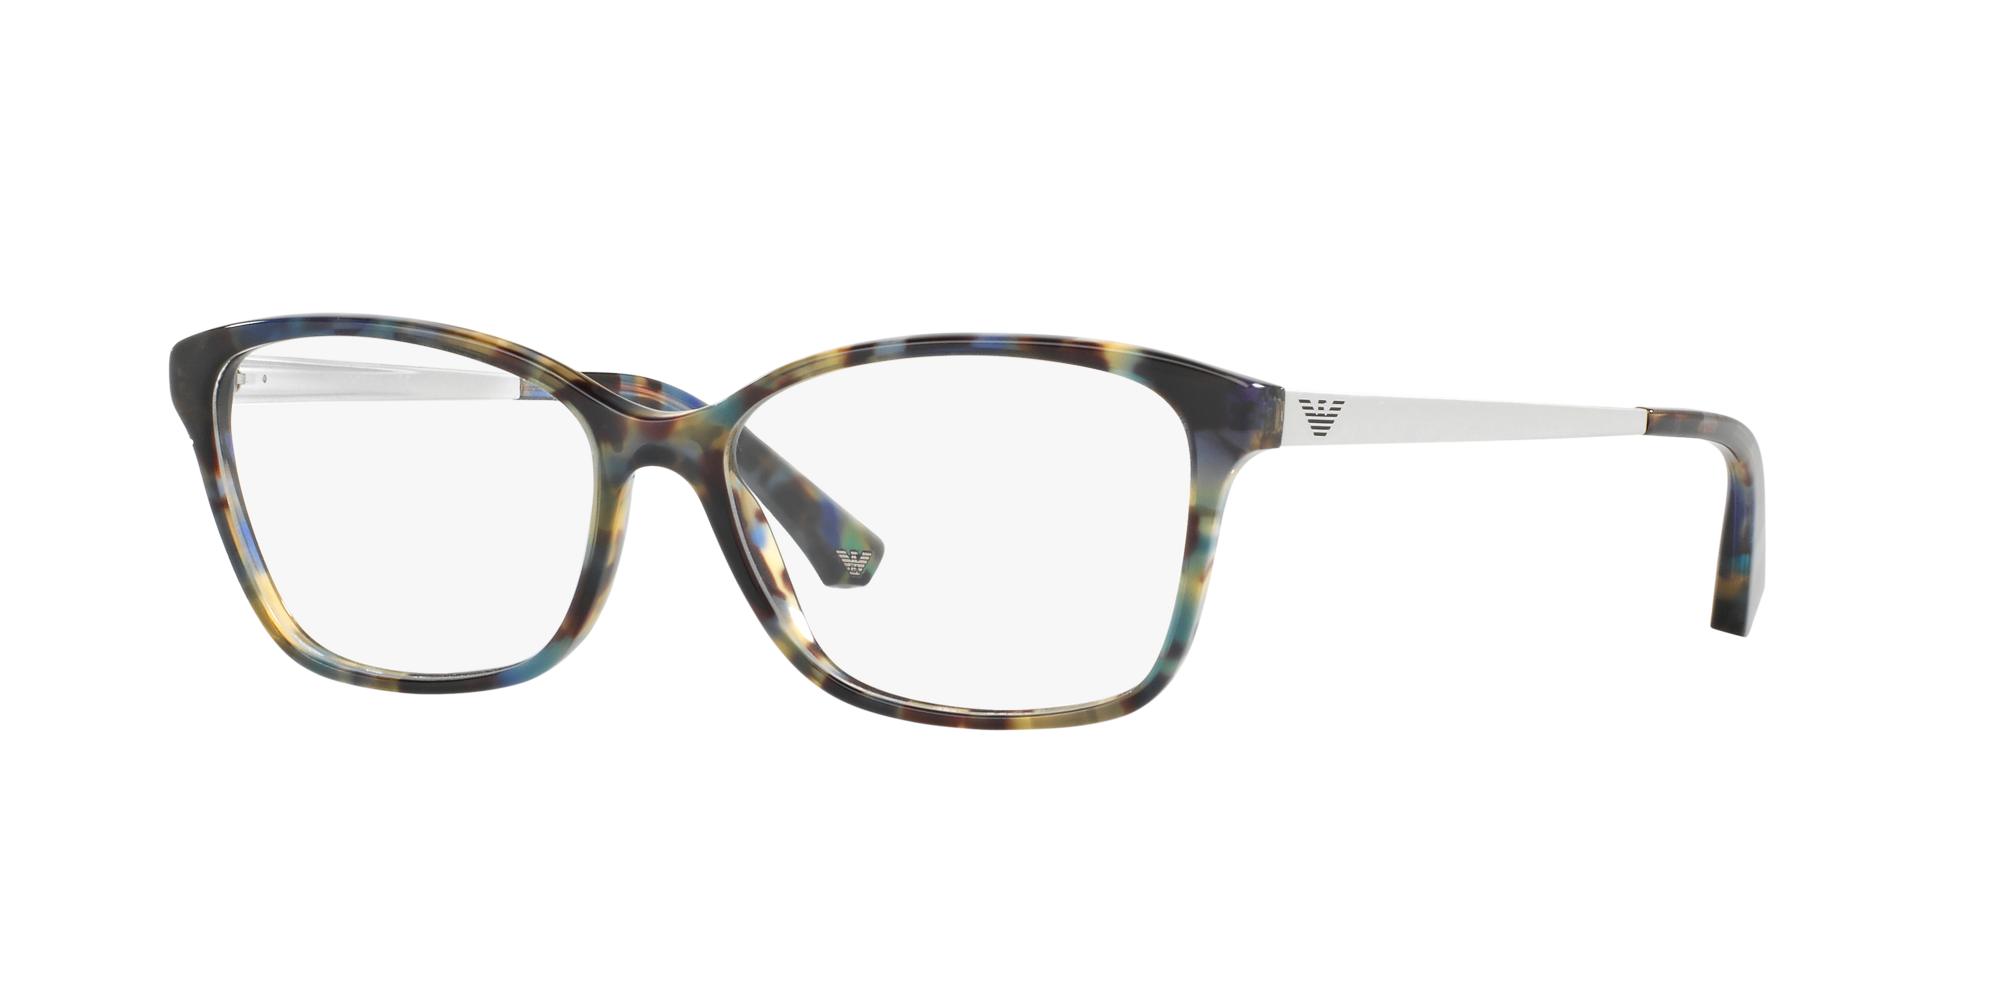 Angle_Left01 Emporio Armani EA 3026 Glasses Transparent / Tortoise Shell